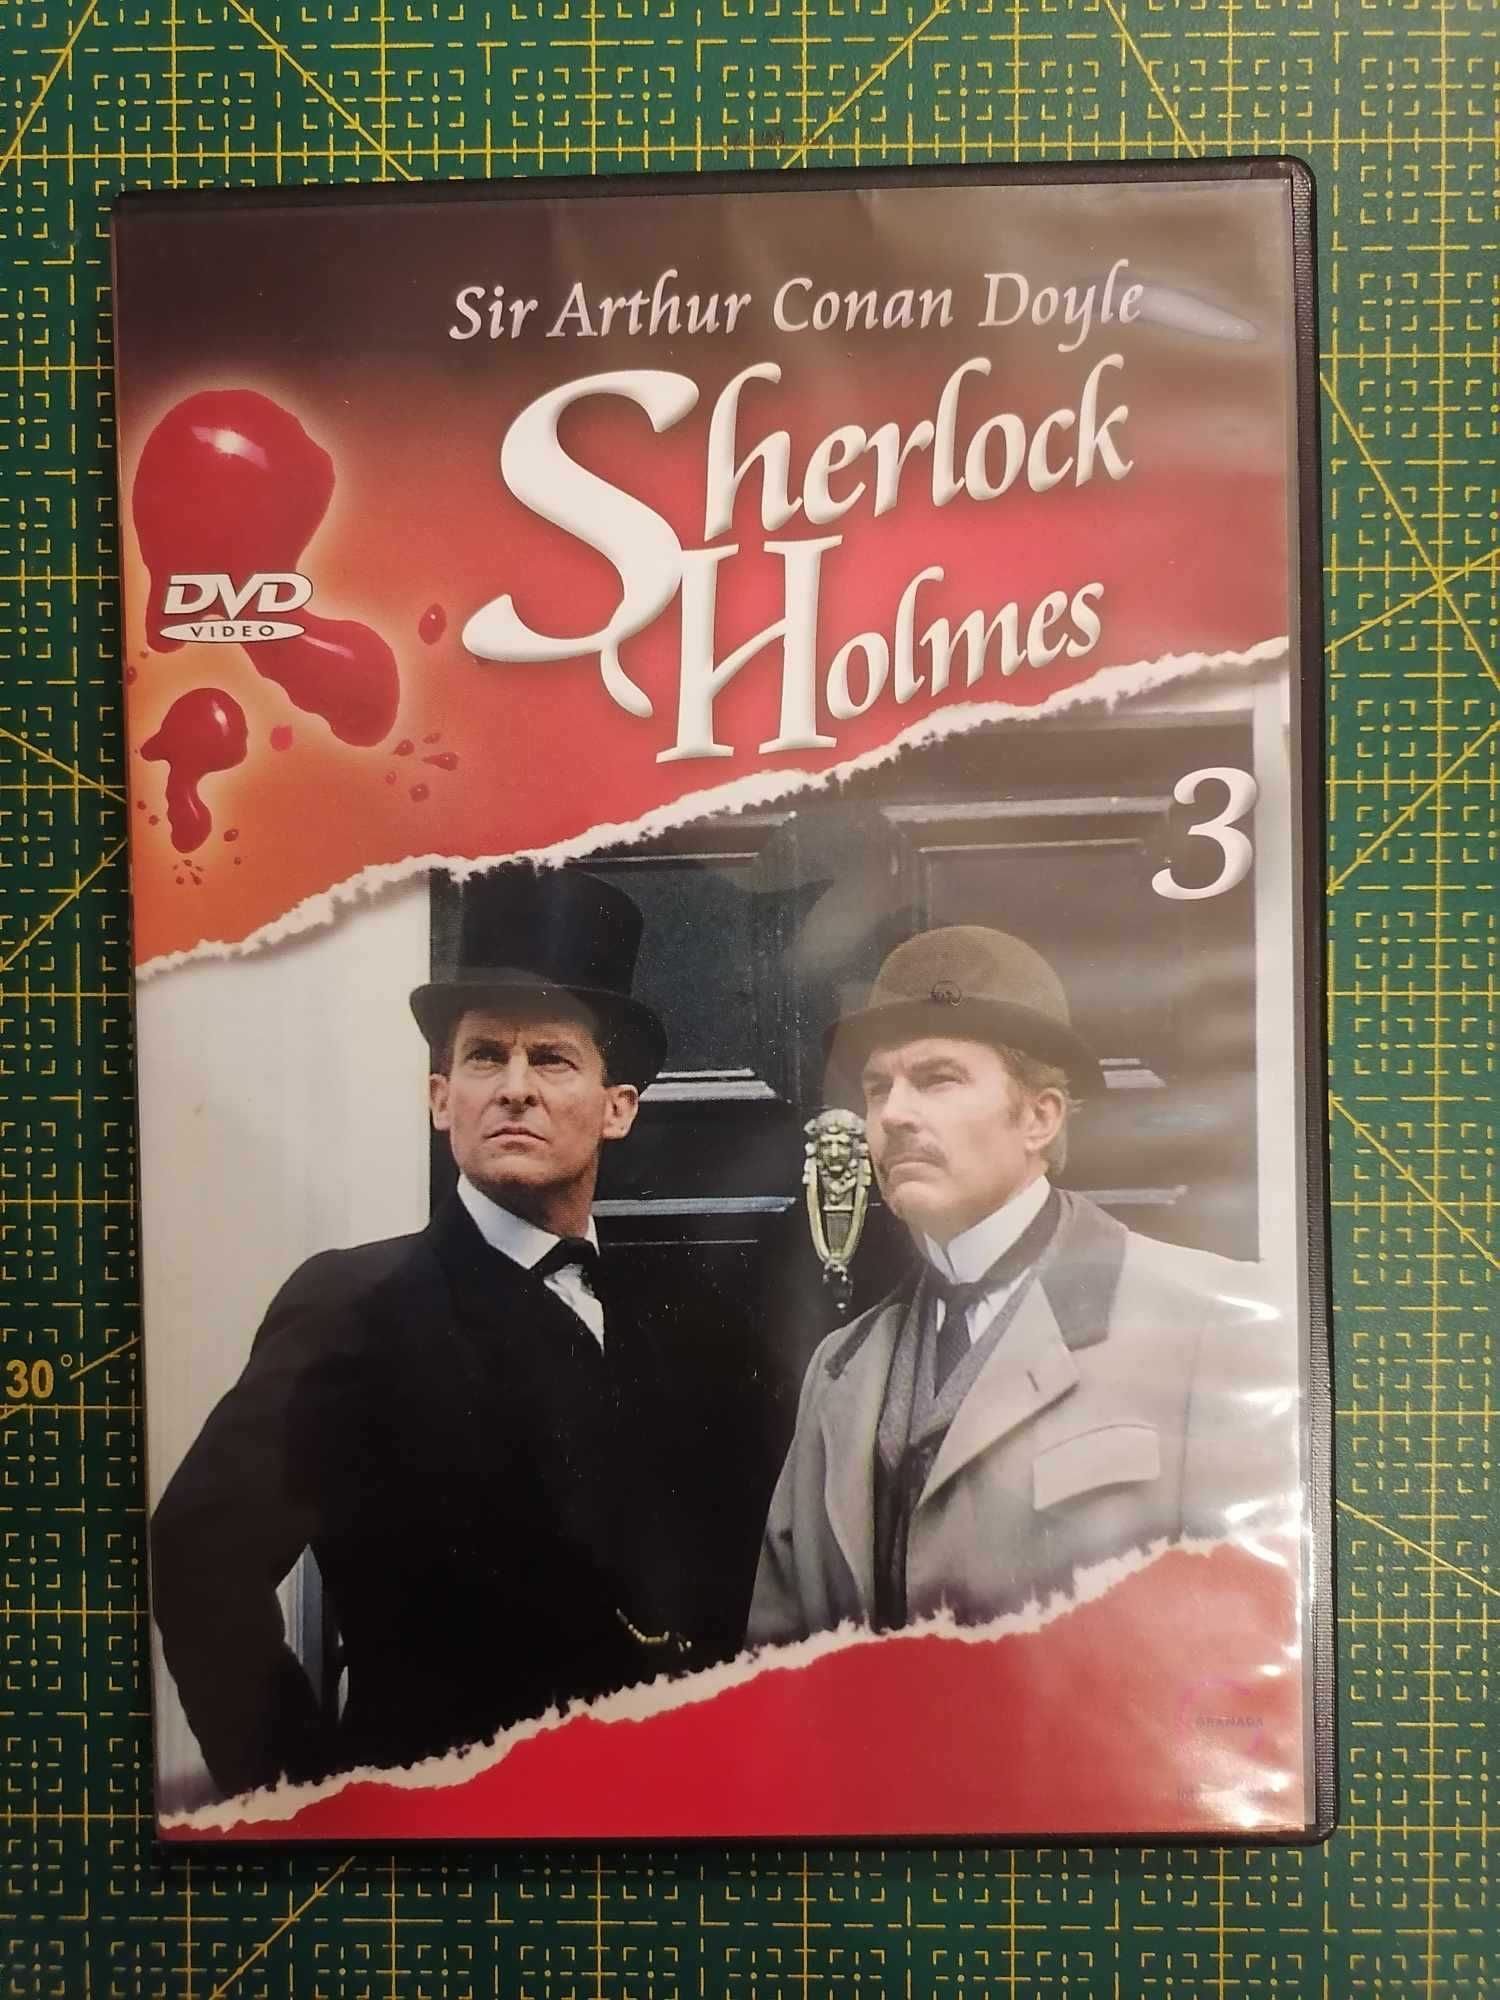 Film DVD serial "Sherlock Holmes 3"